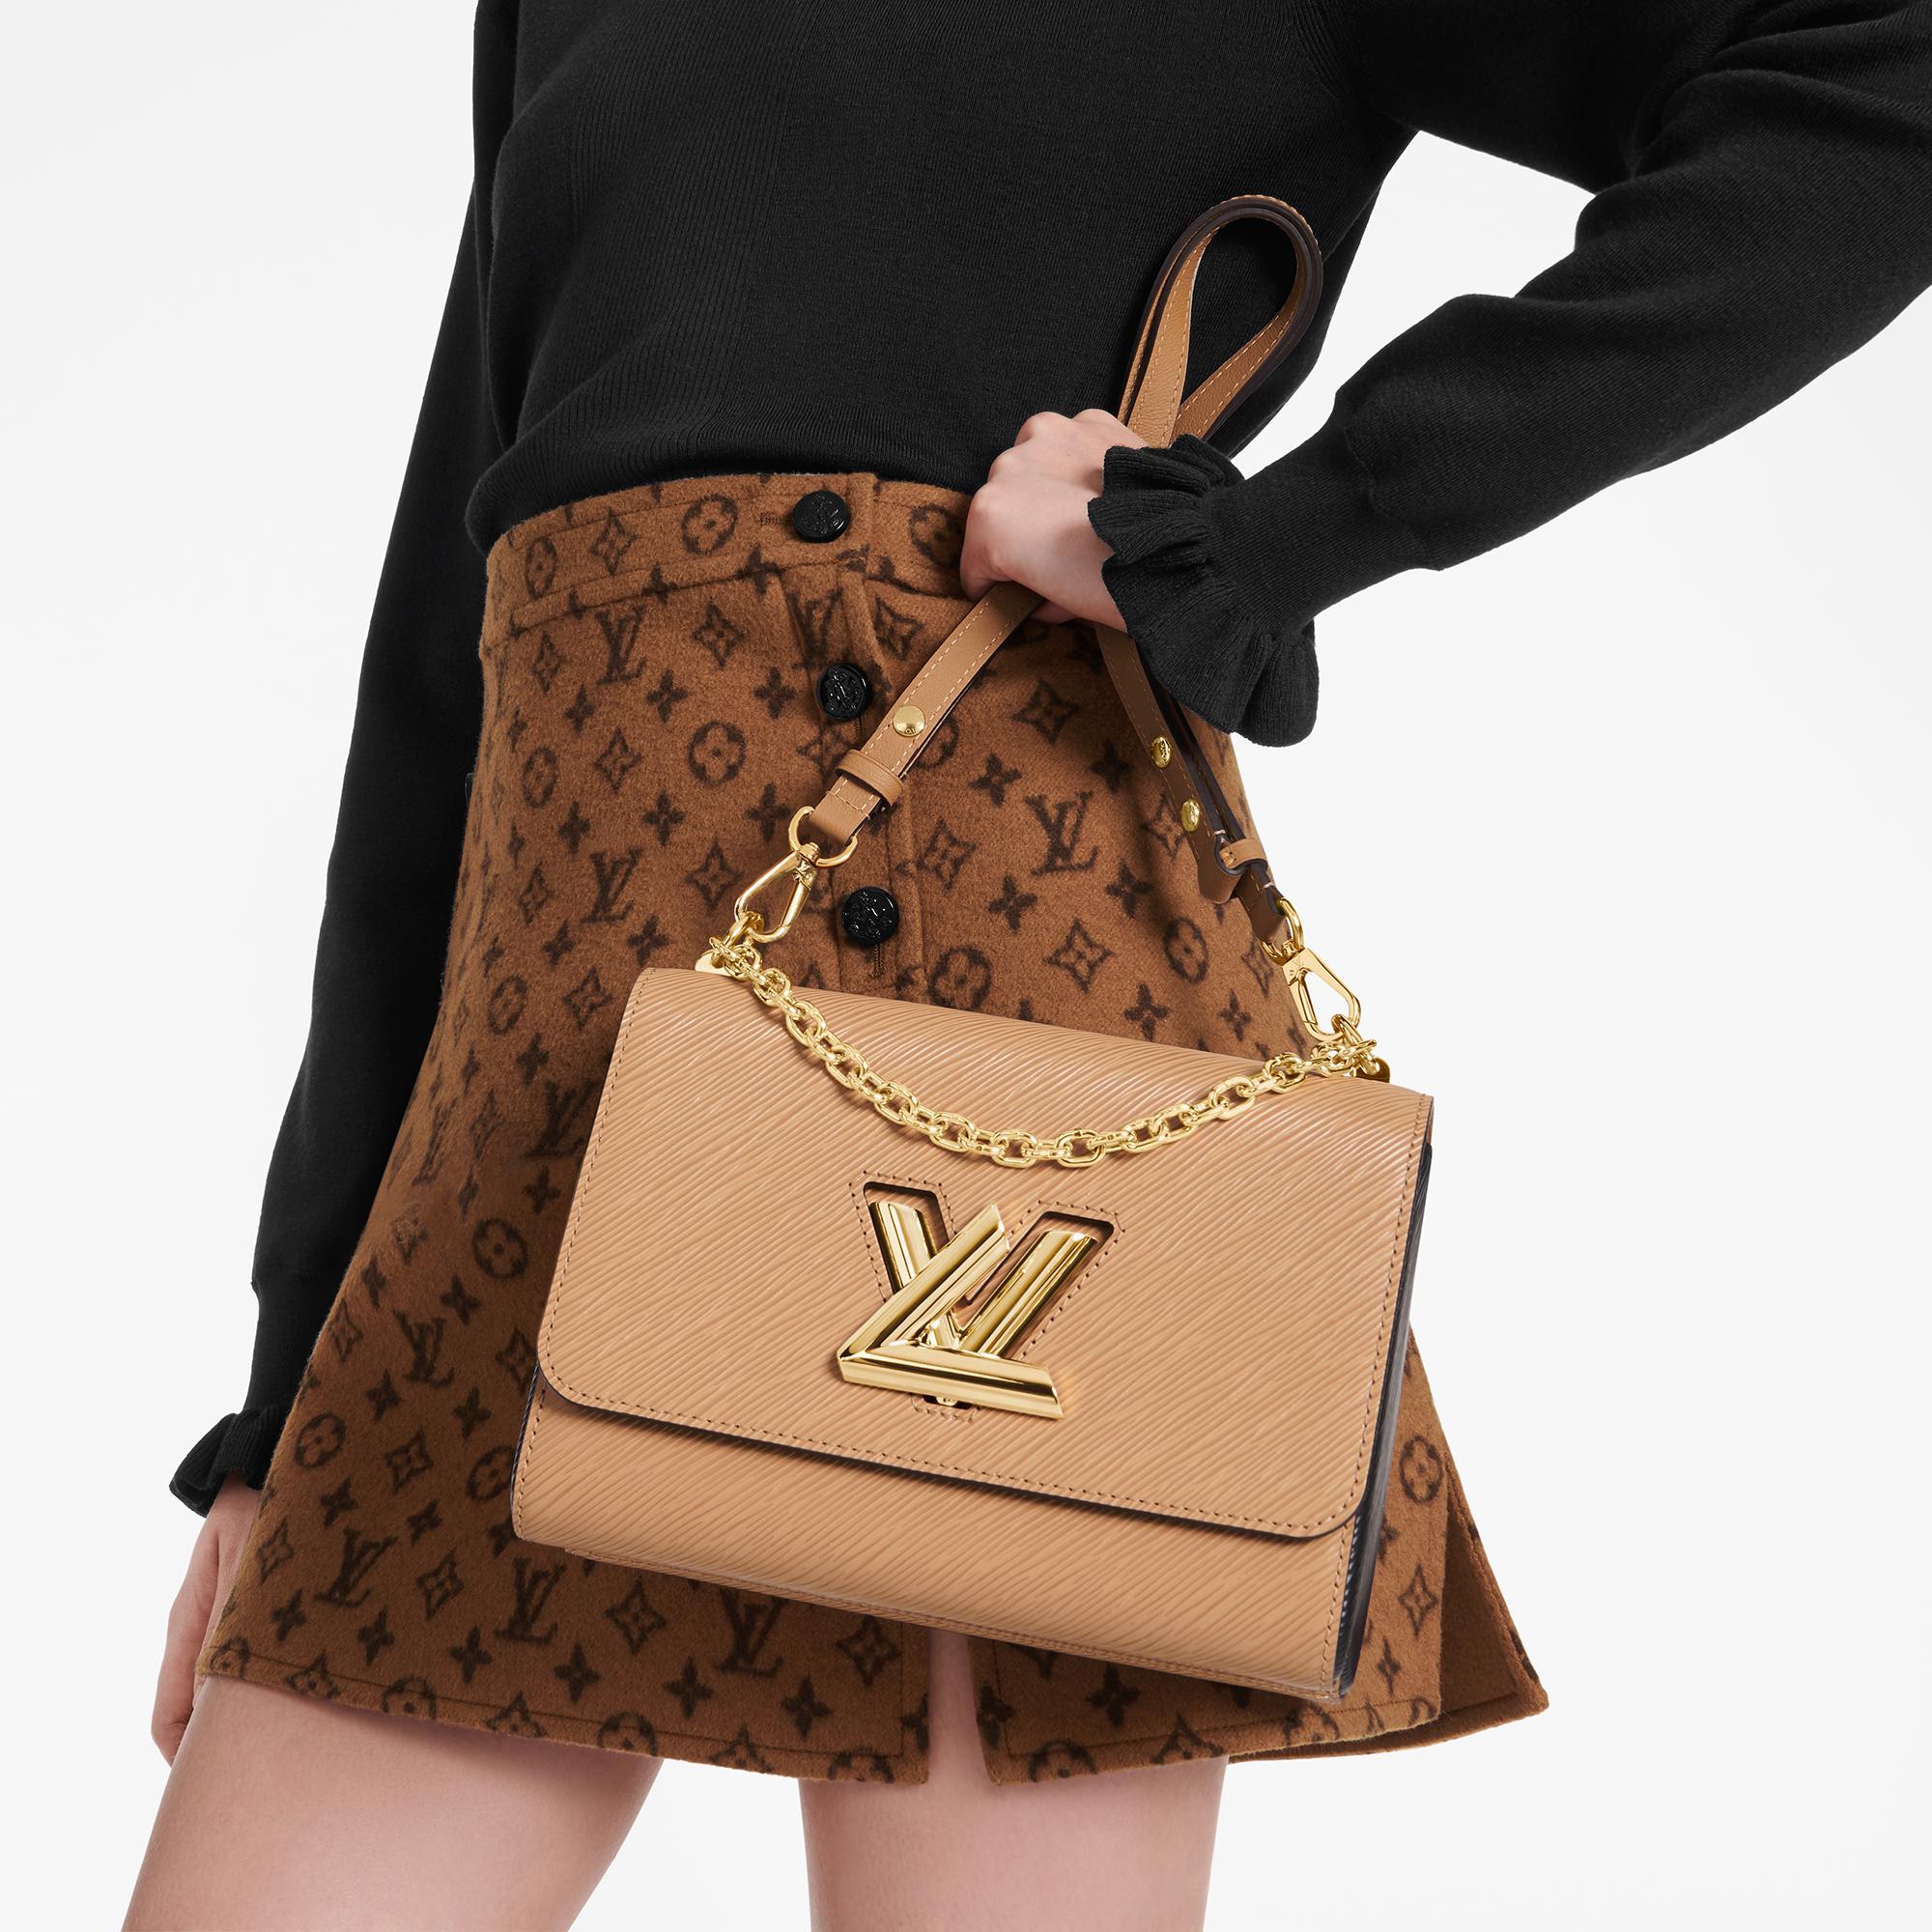 Objeto de deseo: la nueva cartera Twist de Louis Vuitton